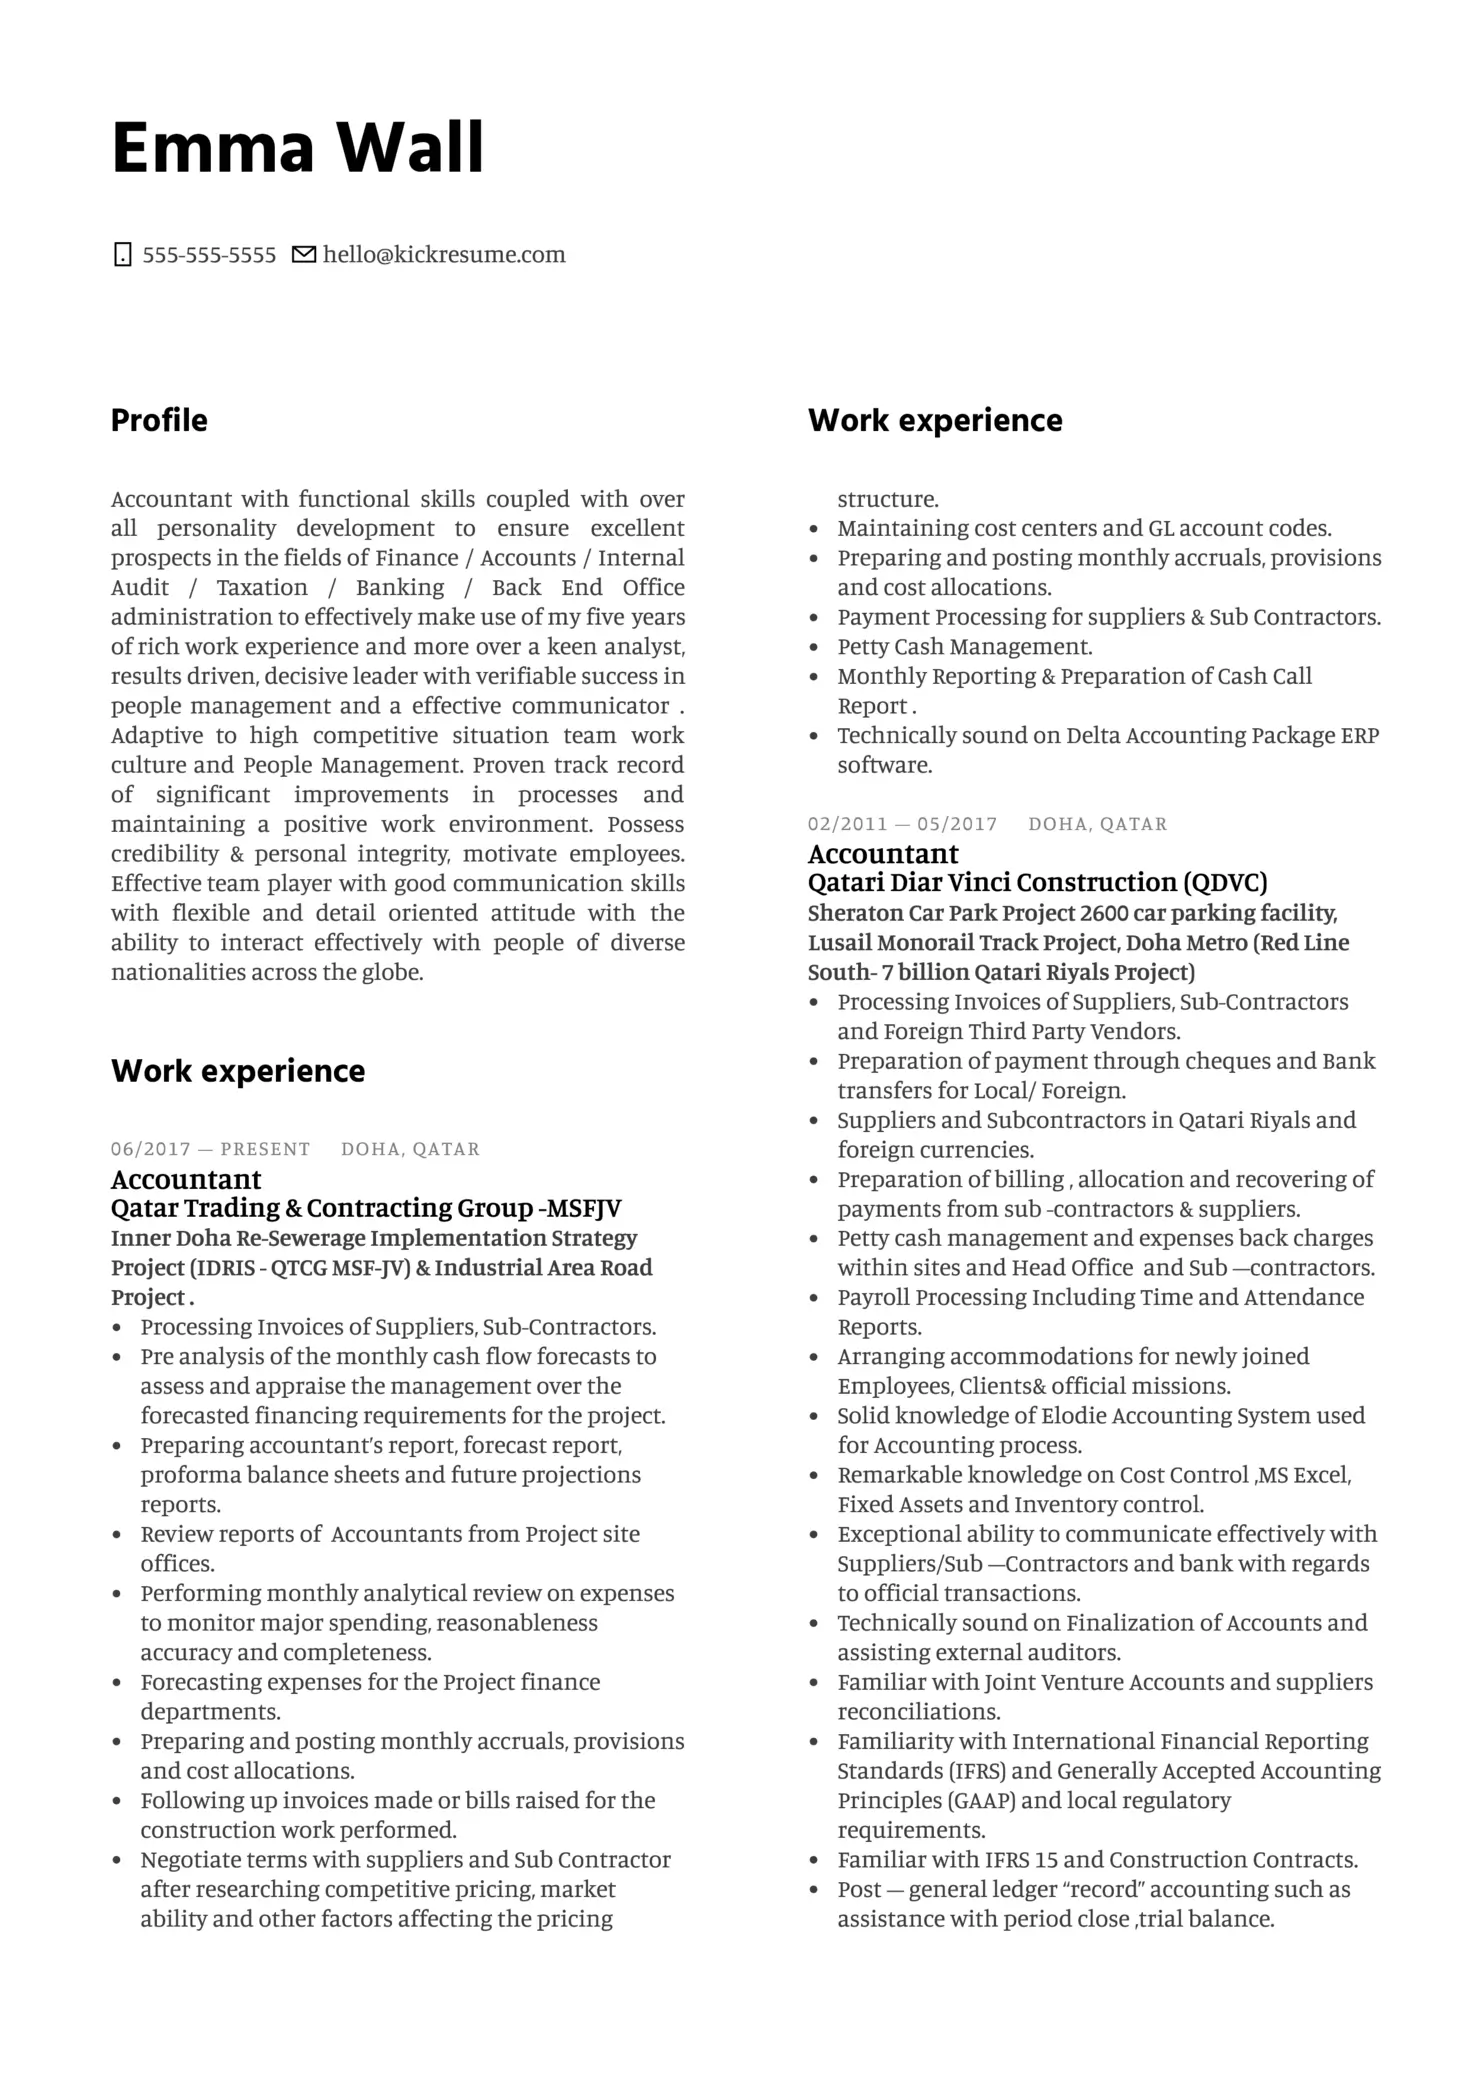 DB Schenker resume sample